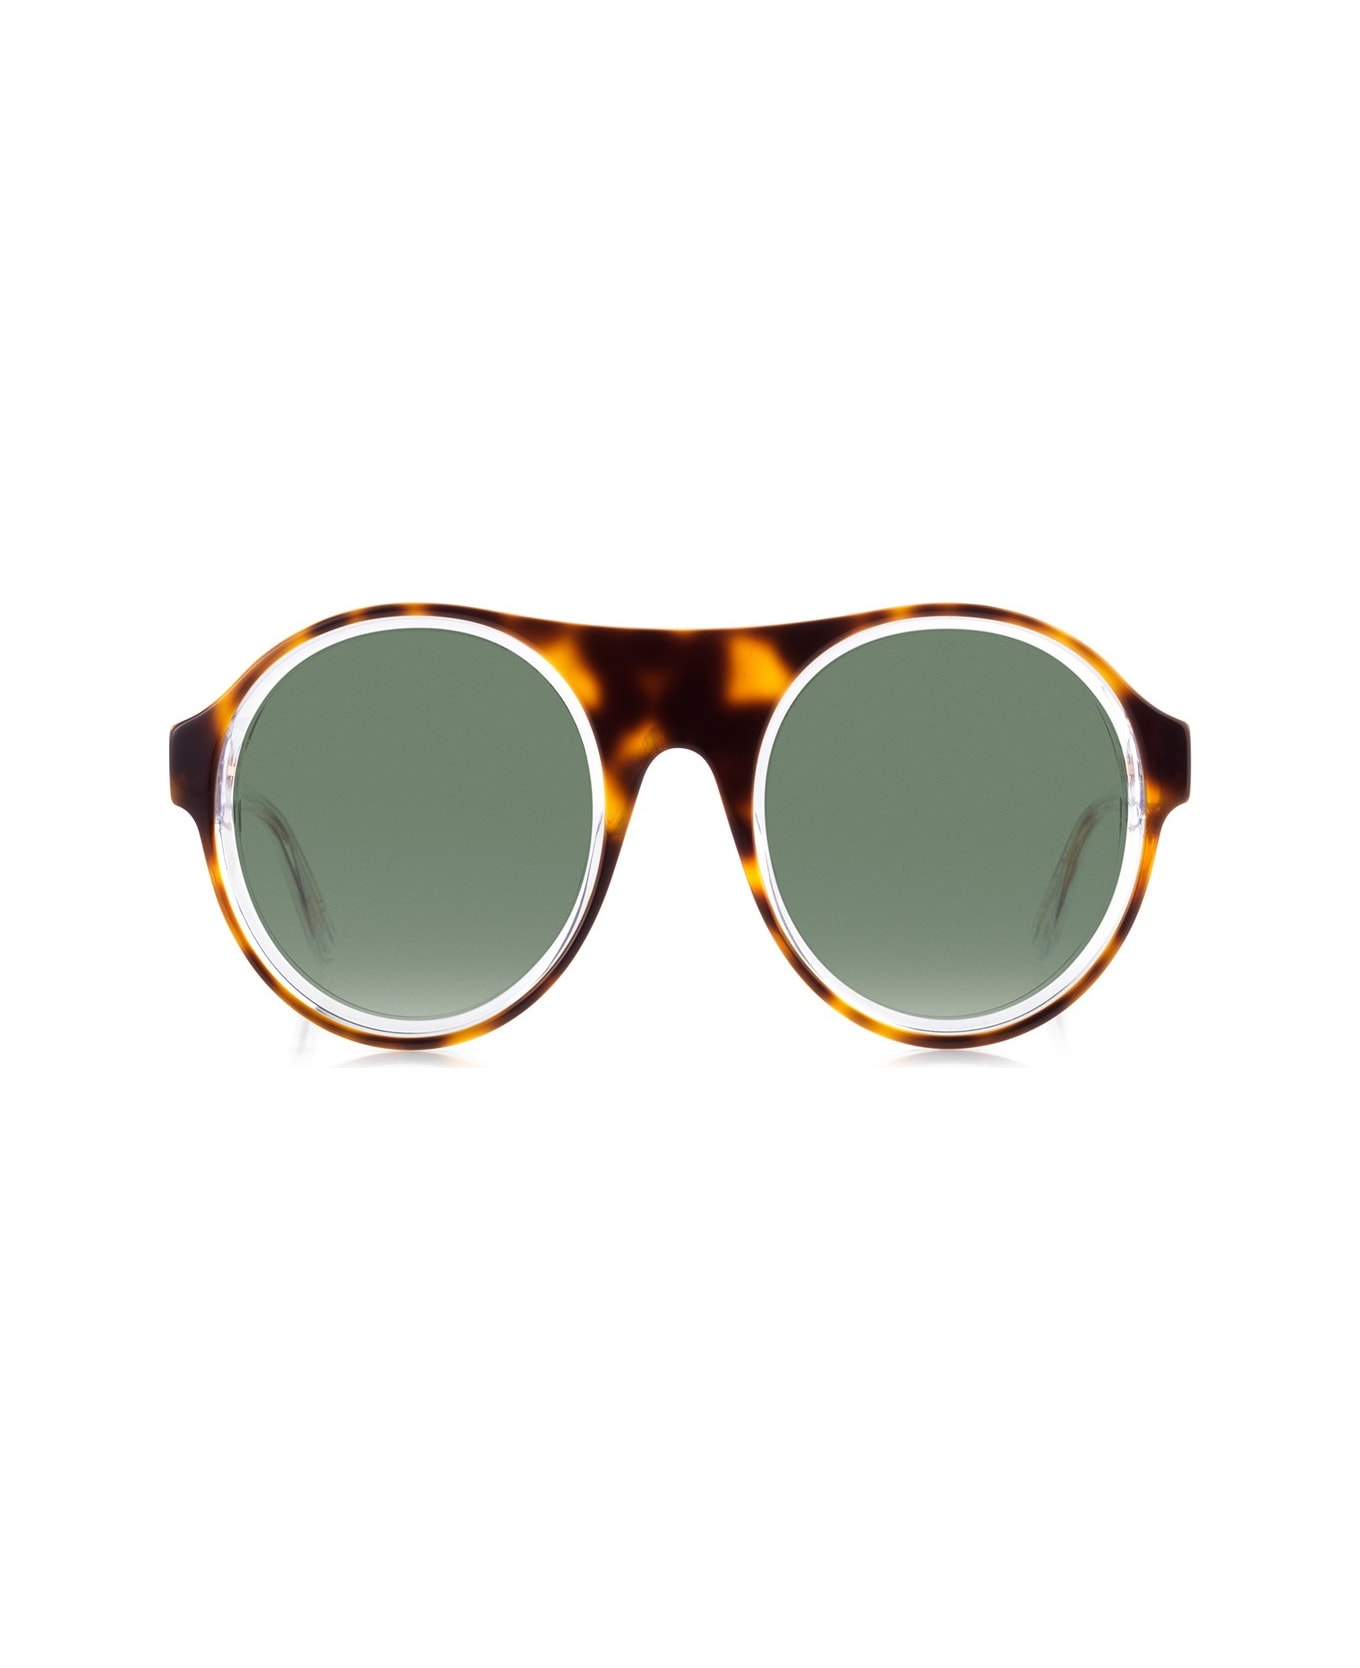 Robert La Roche Rlr S300 Sunglasses - Marrone サングラス